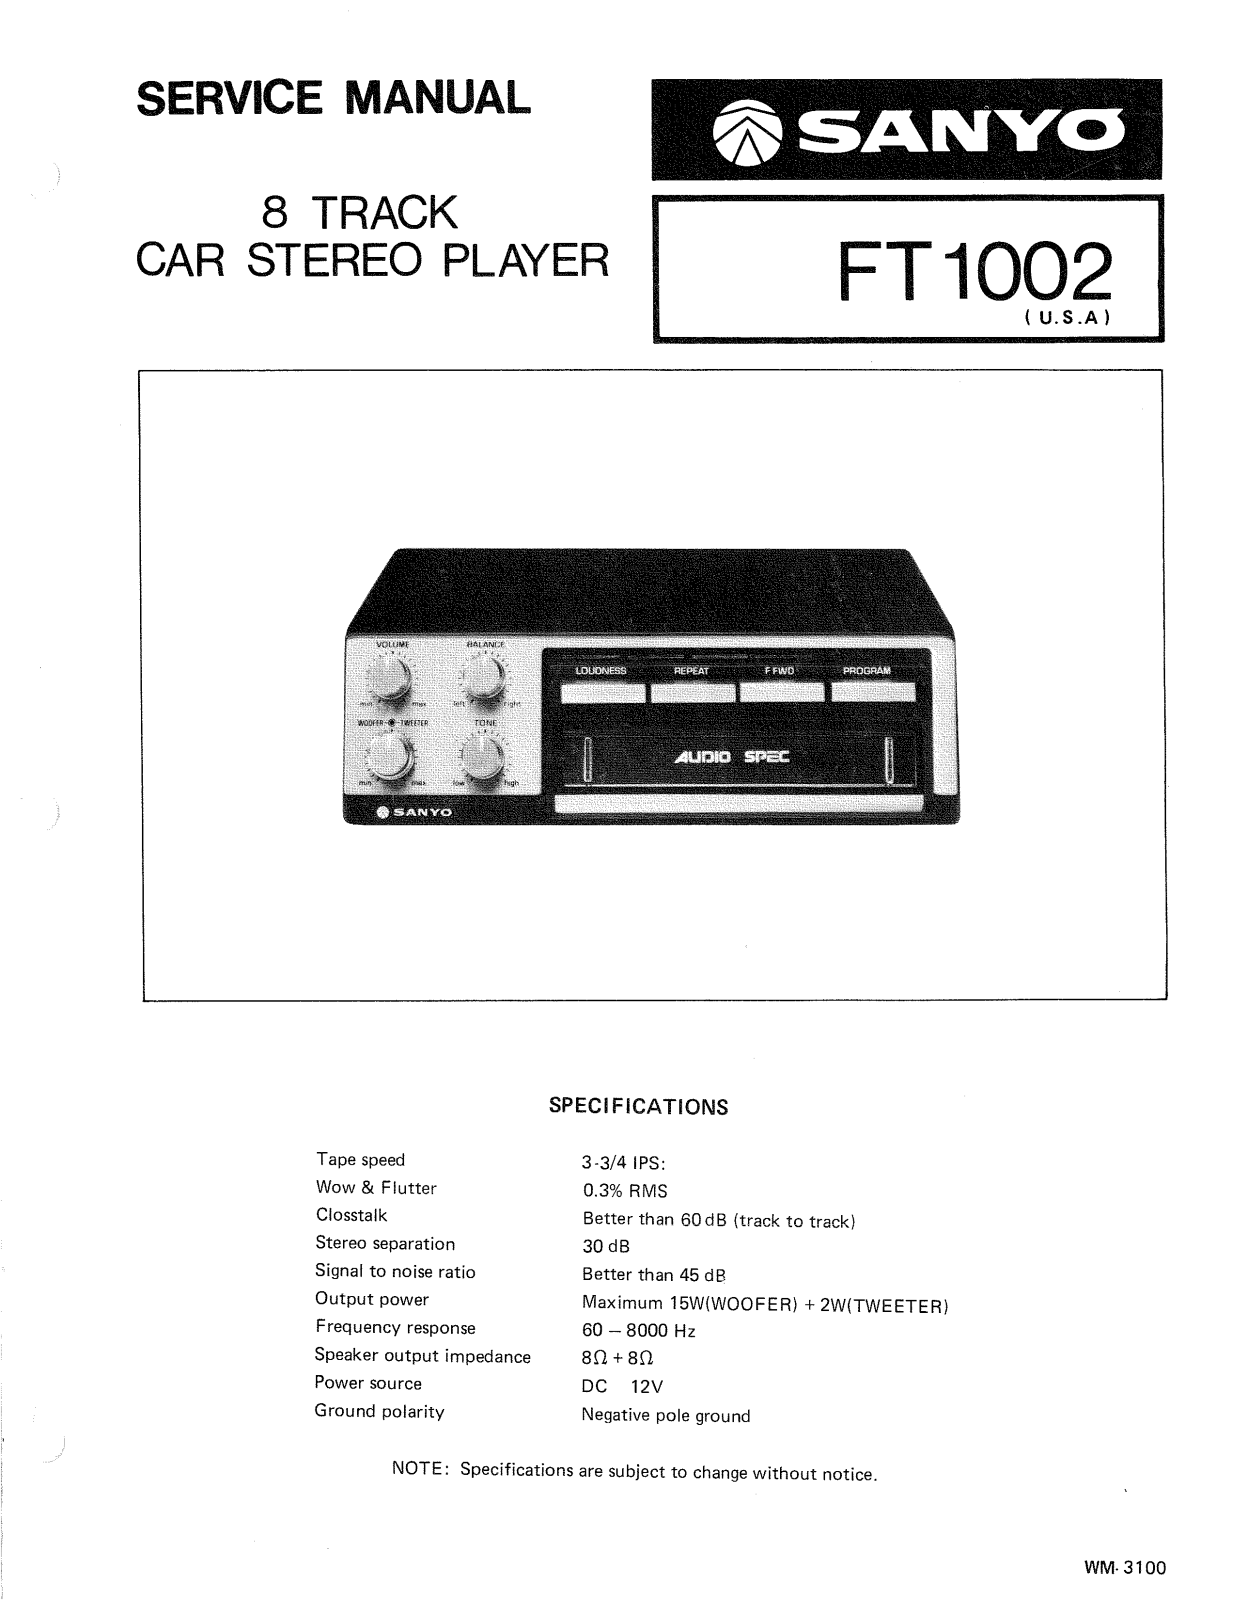 Sanyo FT-1002 Service manual